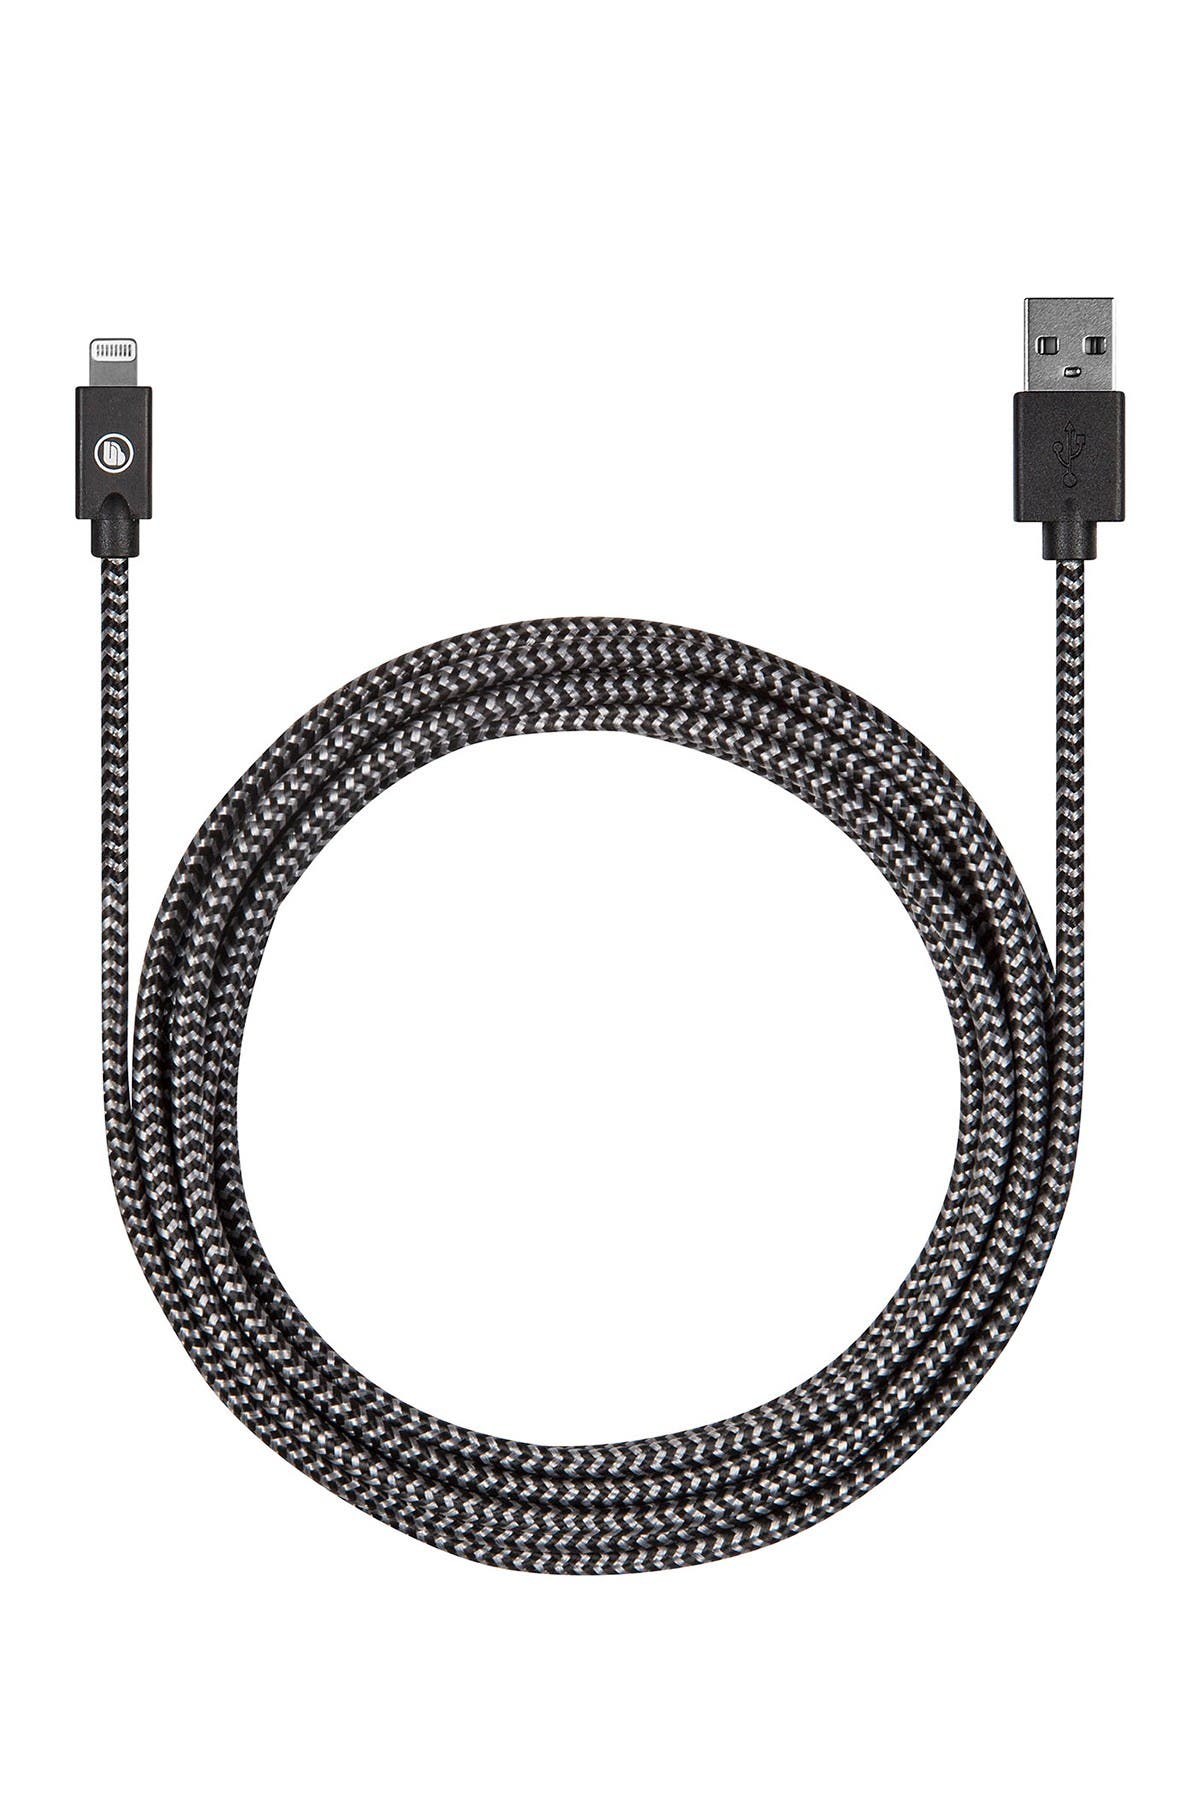 Merkury Innovations Black 10 Ft. Threadz Extended Length Lightning Cable